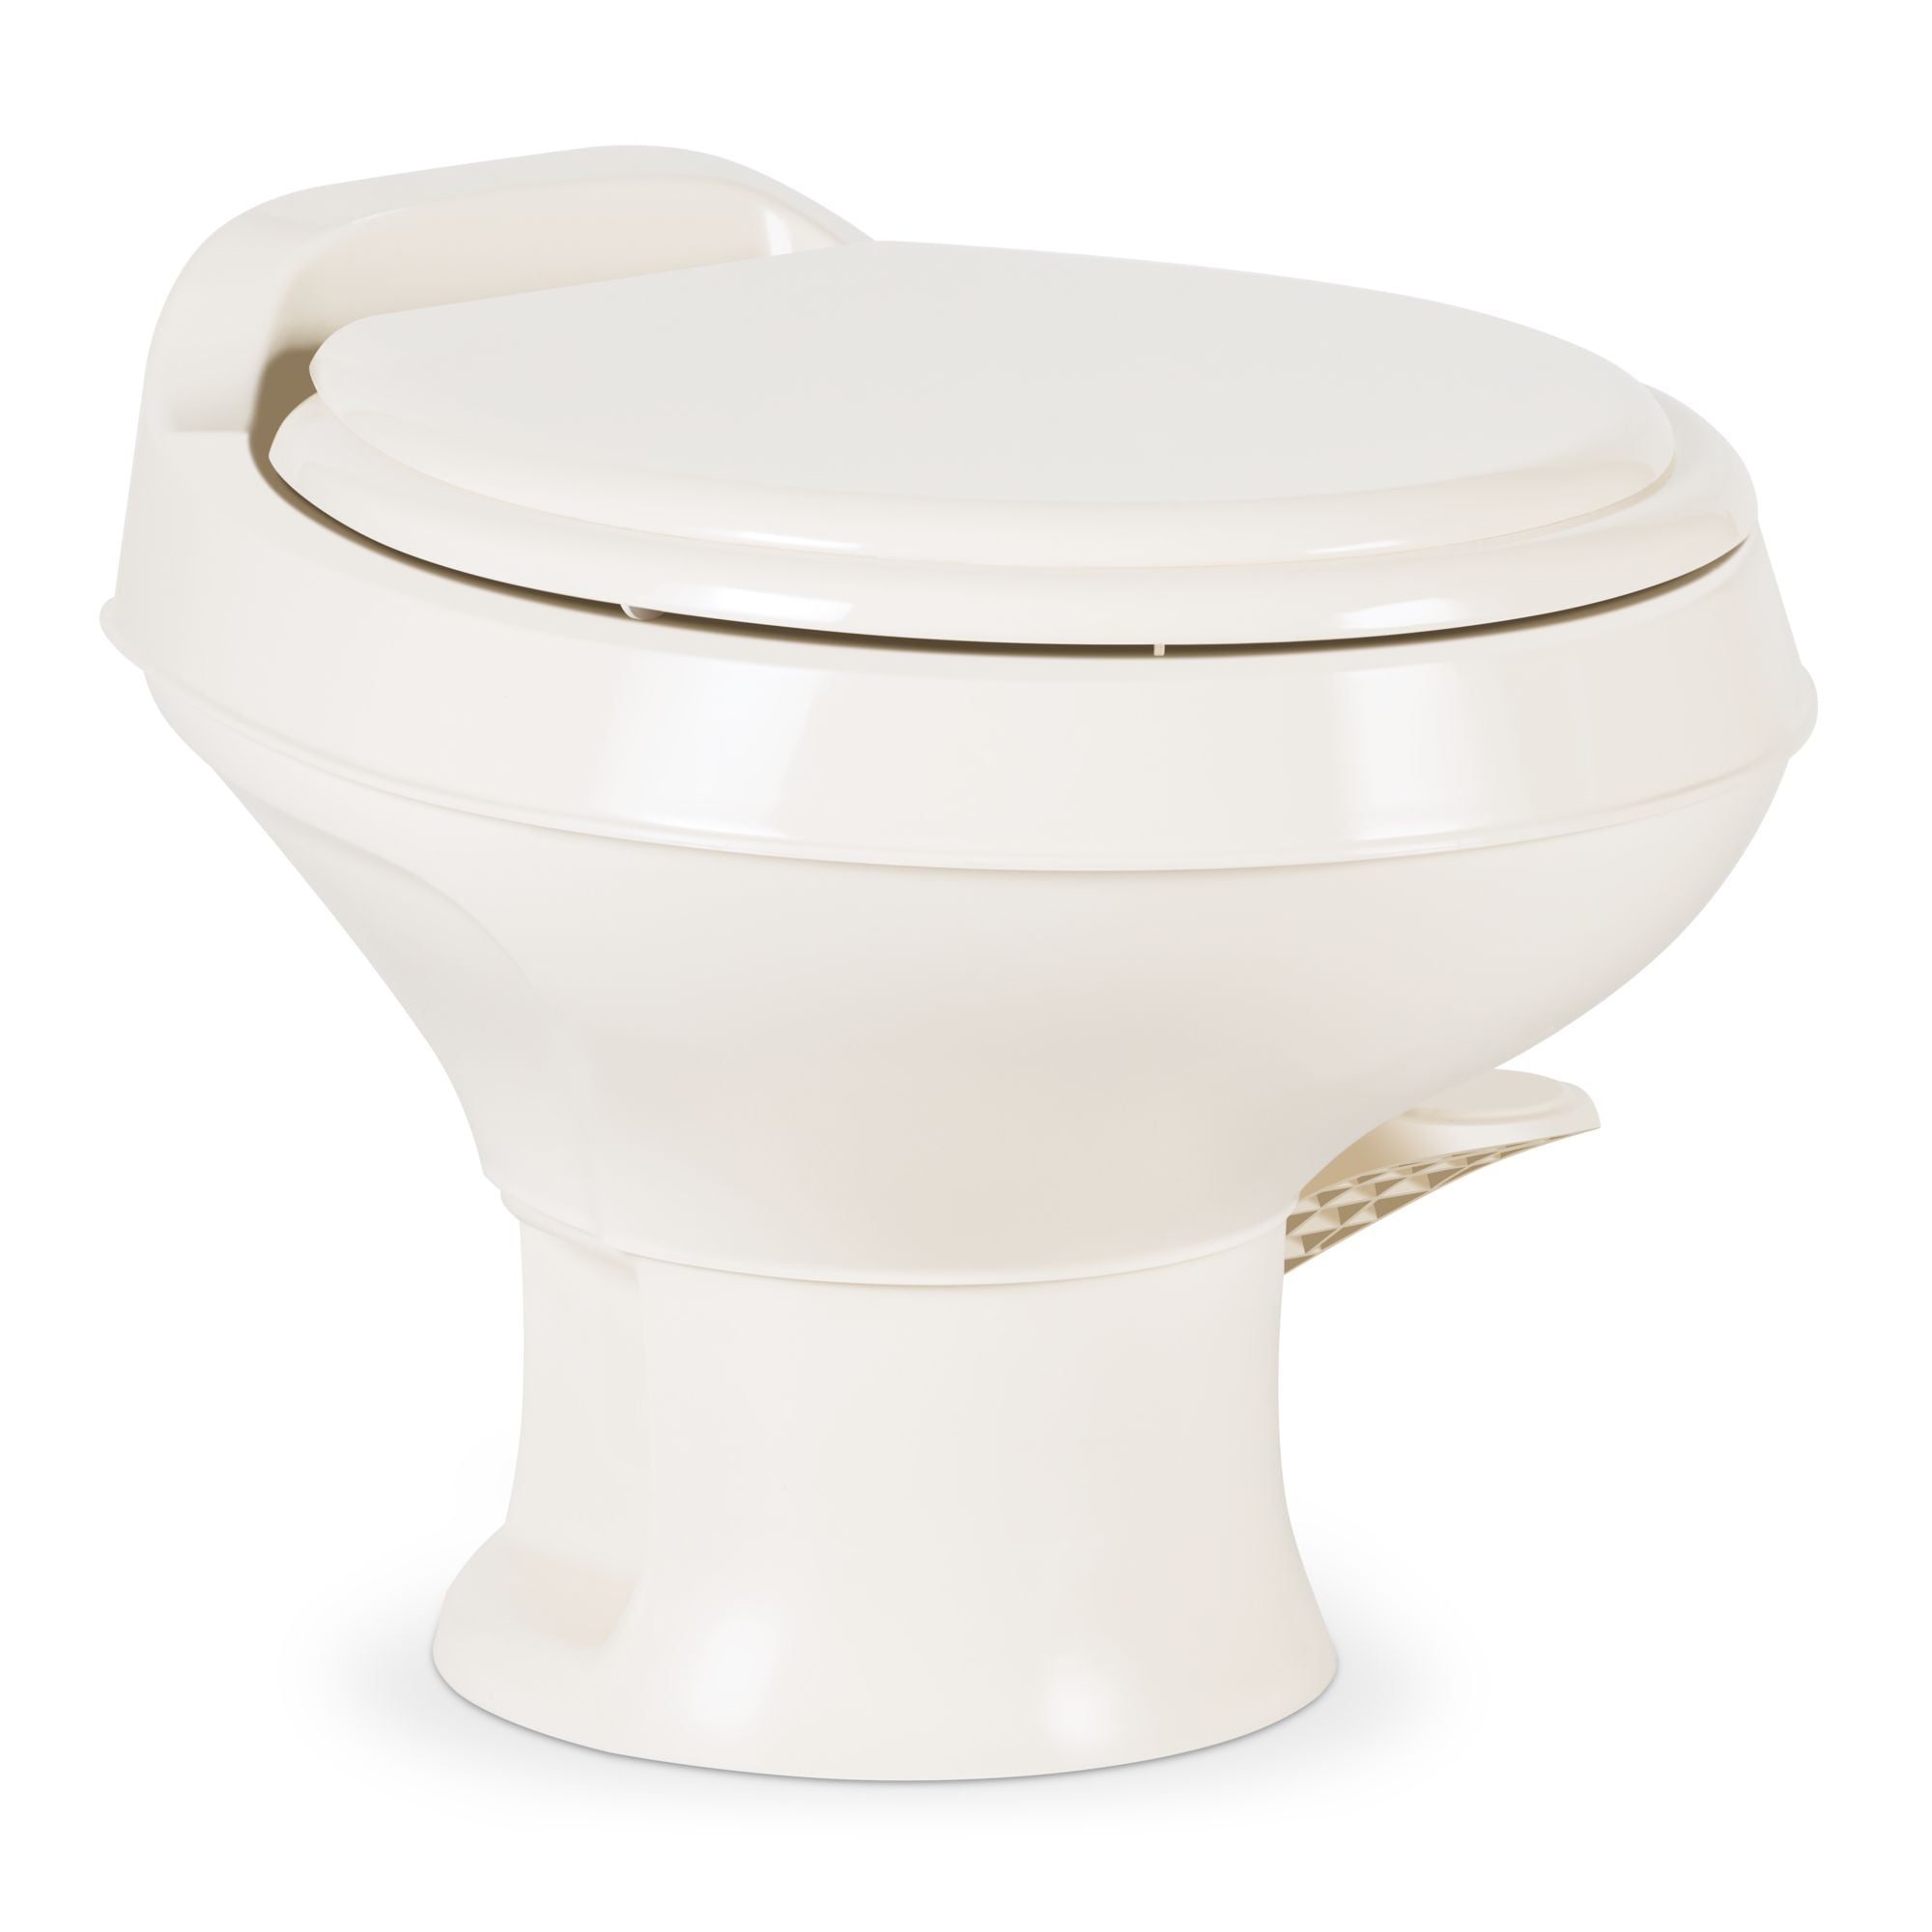 Dometic 302301671 300 Series Low Profile Heavy Duty Plastic RV Toilet, White